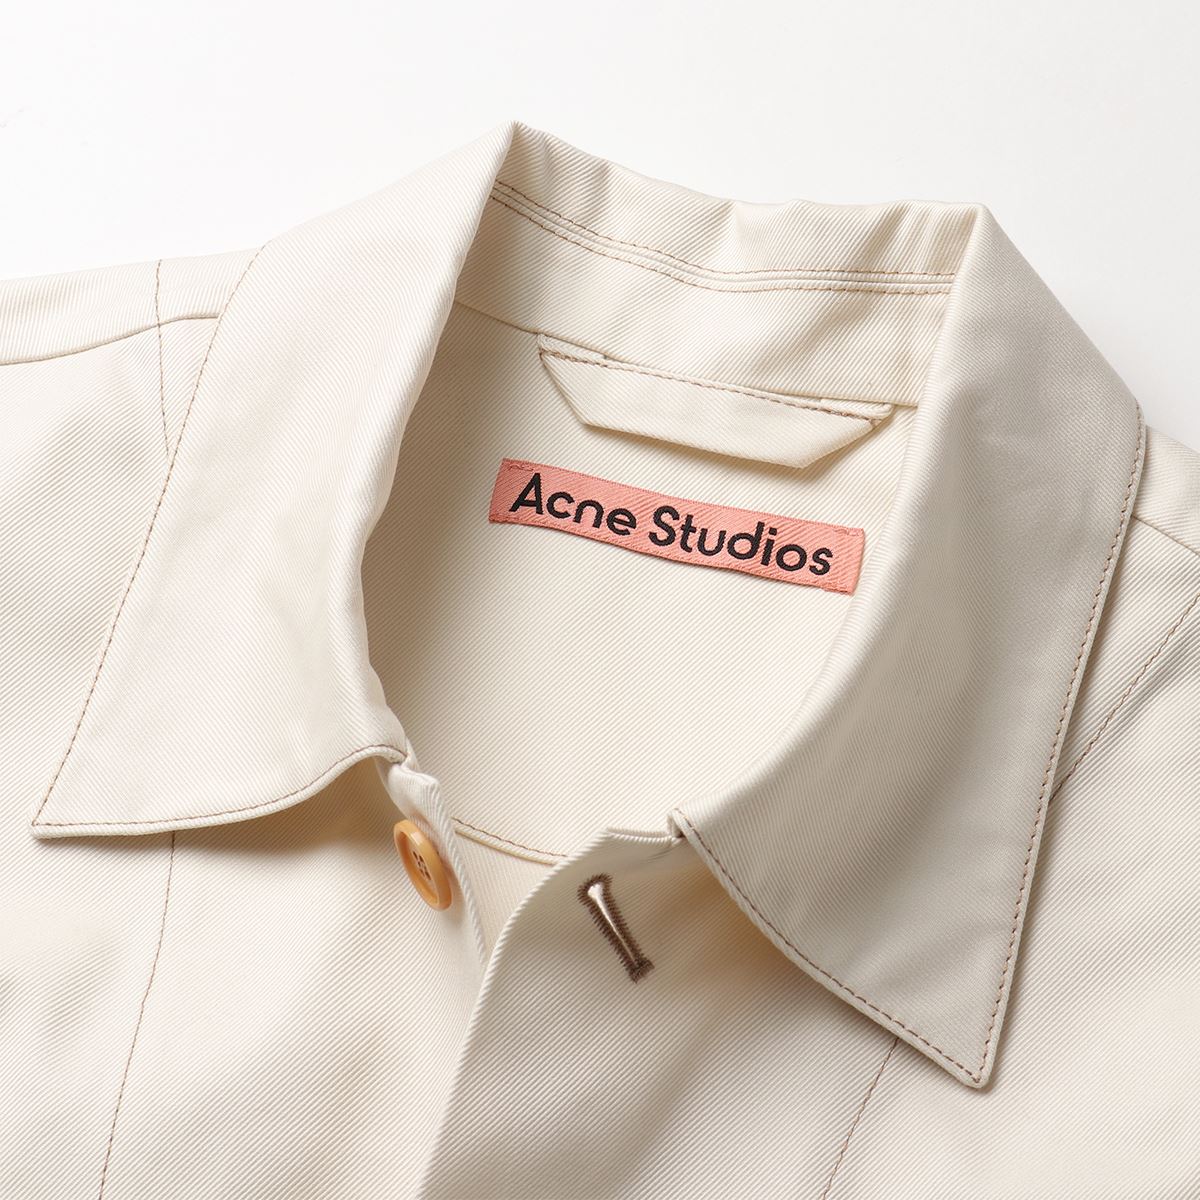 Acne Studios アクネストゥディオズ B90539 FN MN OUTW000672 ヘビーツイルジャケット 長袖 シャツ コットン  胸ポケット Ecru-beige メンズ | インポートセレクト musee